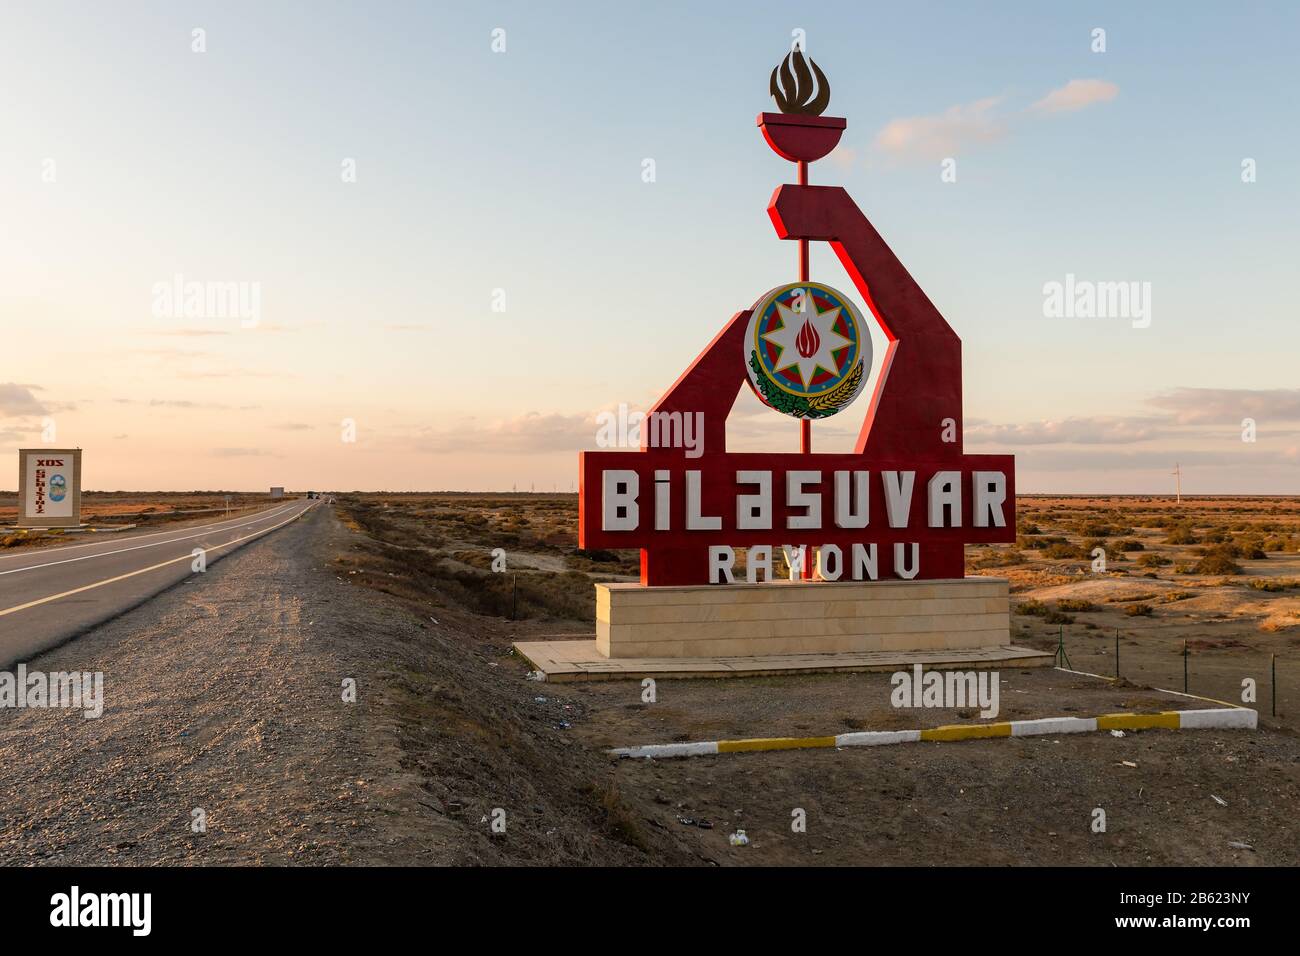 Bilasuvar, Azerbaijan - November 16, 2019: Entrance to the Bilasuvar District. Road sign at the entrance to Bilasuvar Rayon. Azerbaijan. Stock Photo